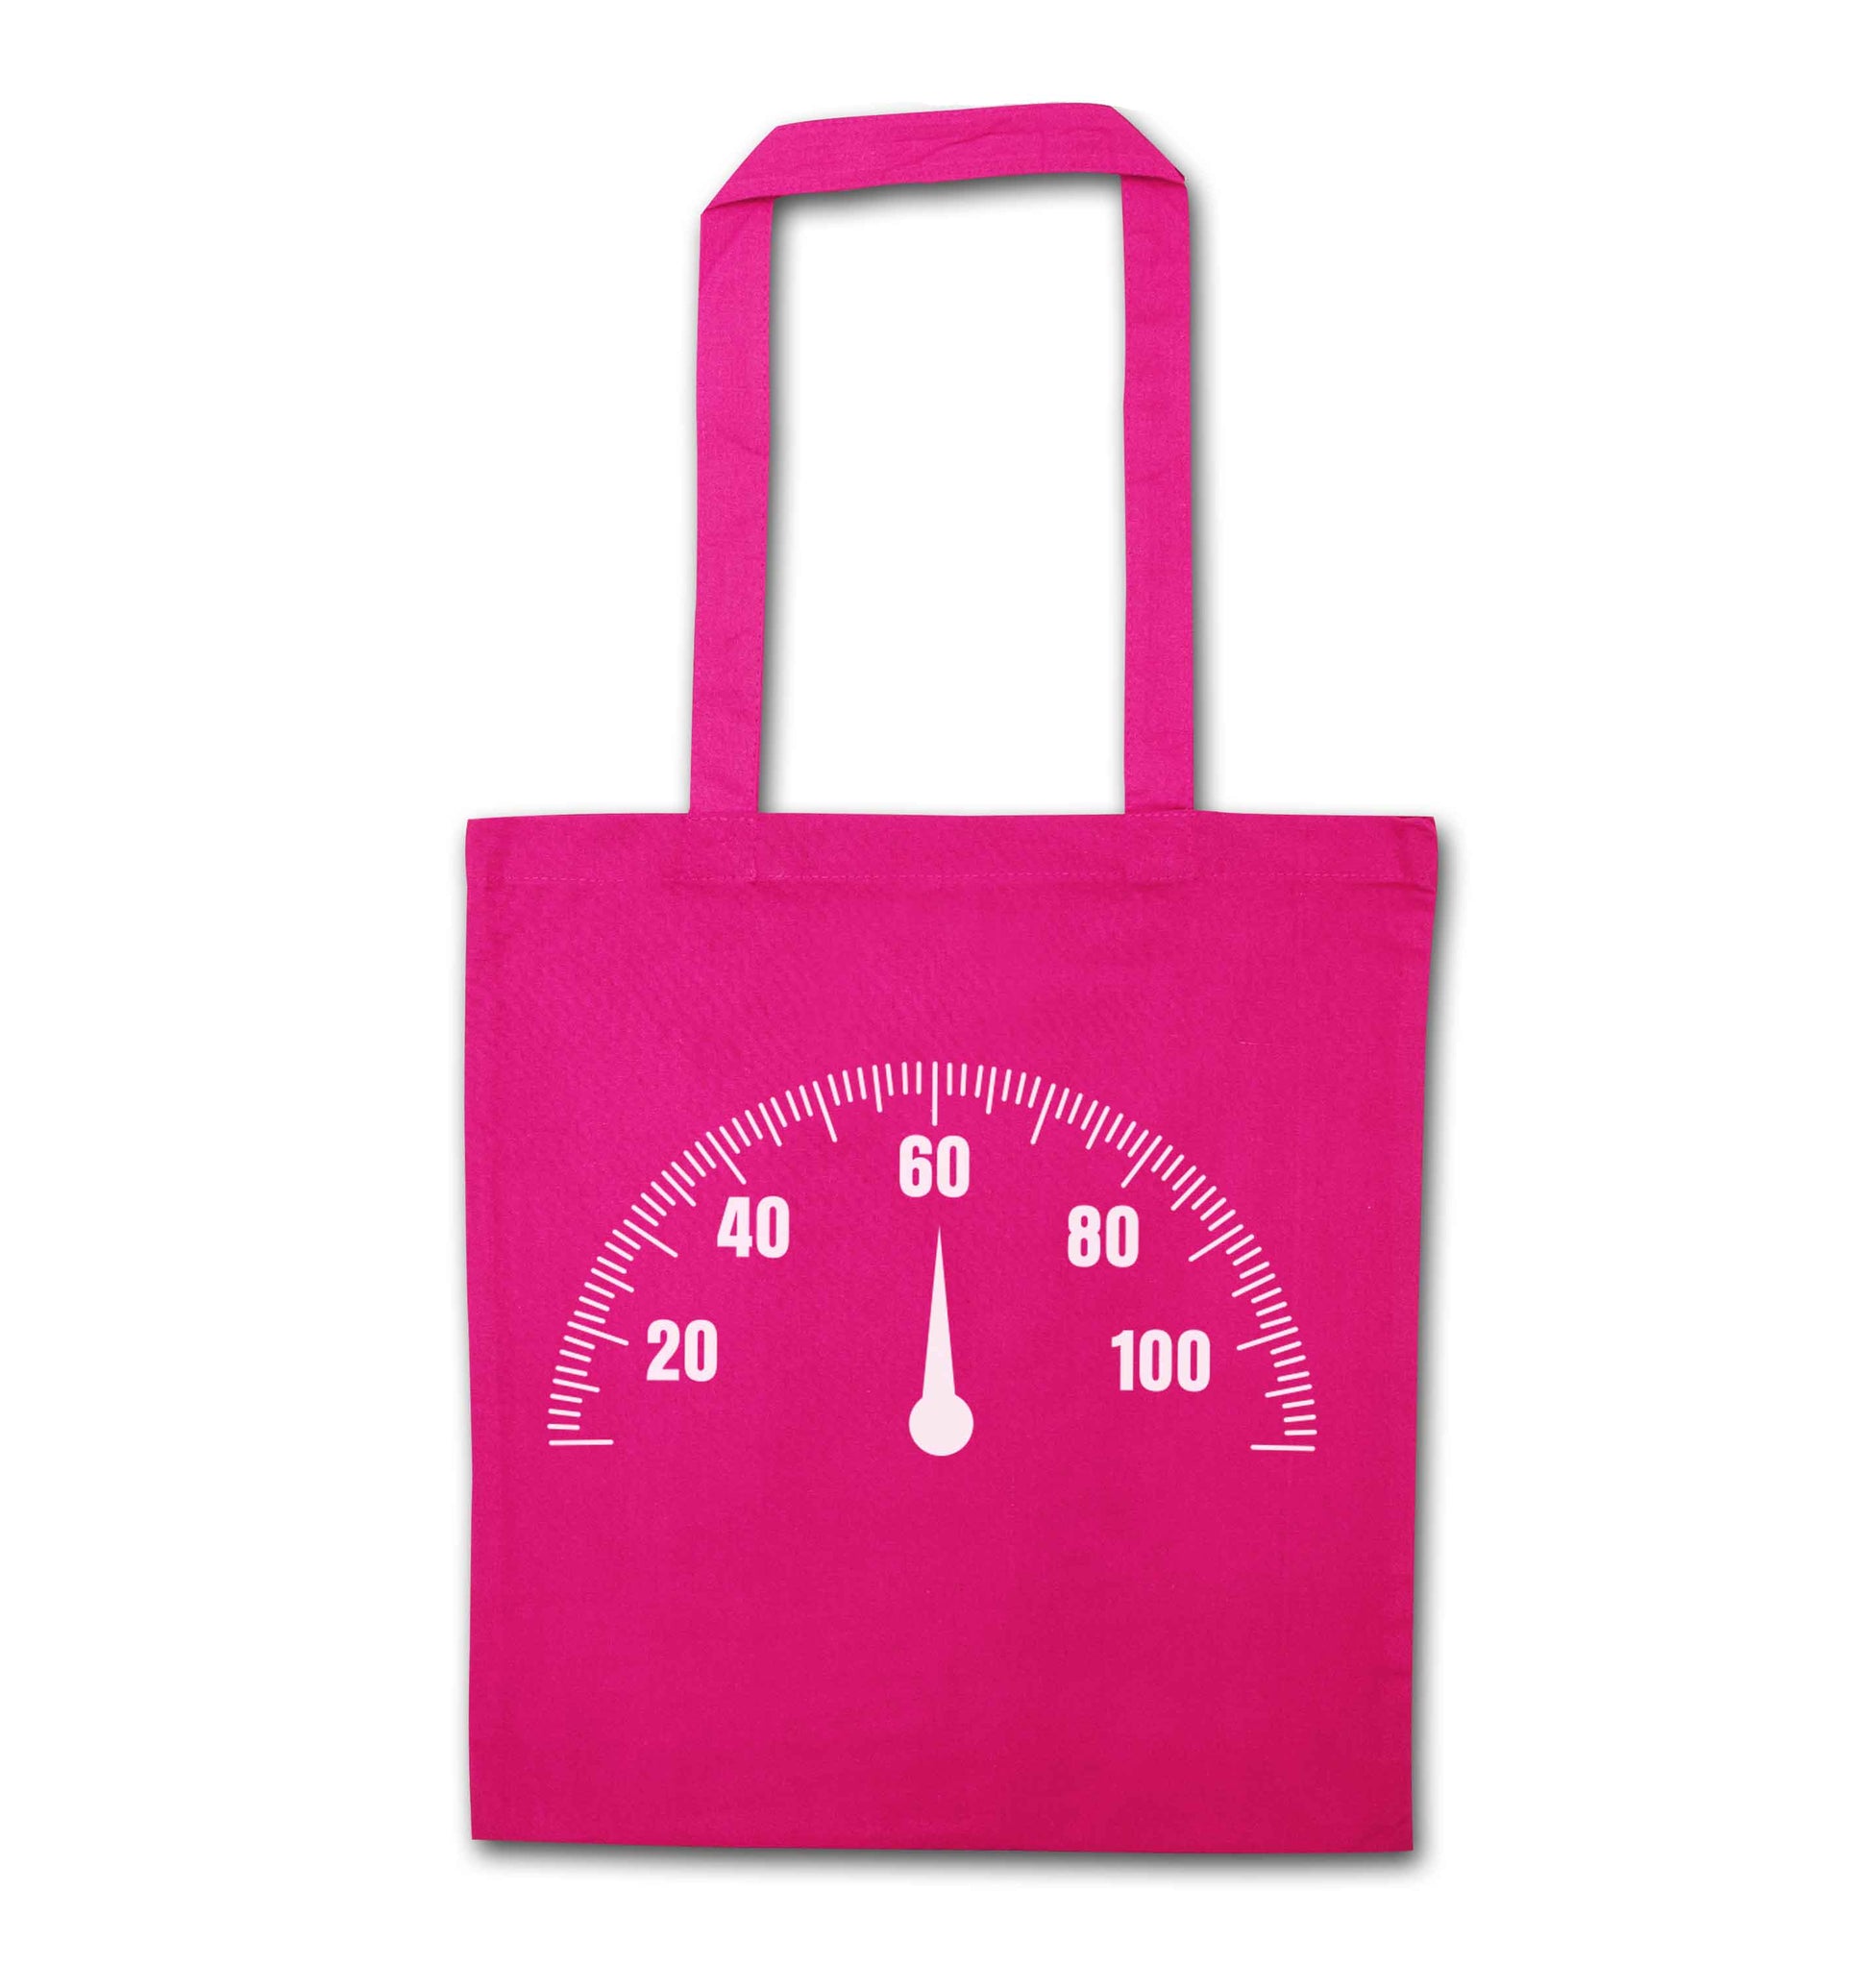 Speed dial 60 pink tote bag